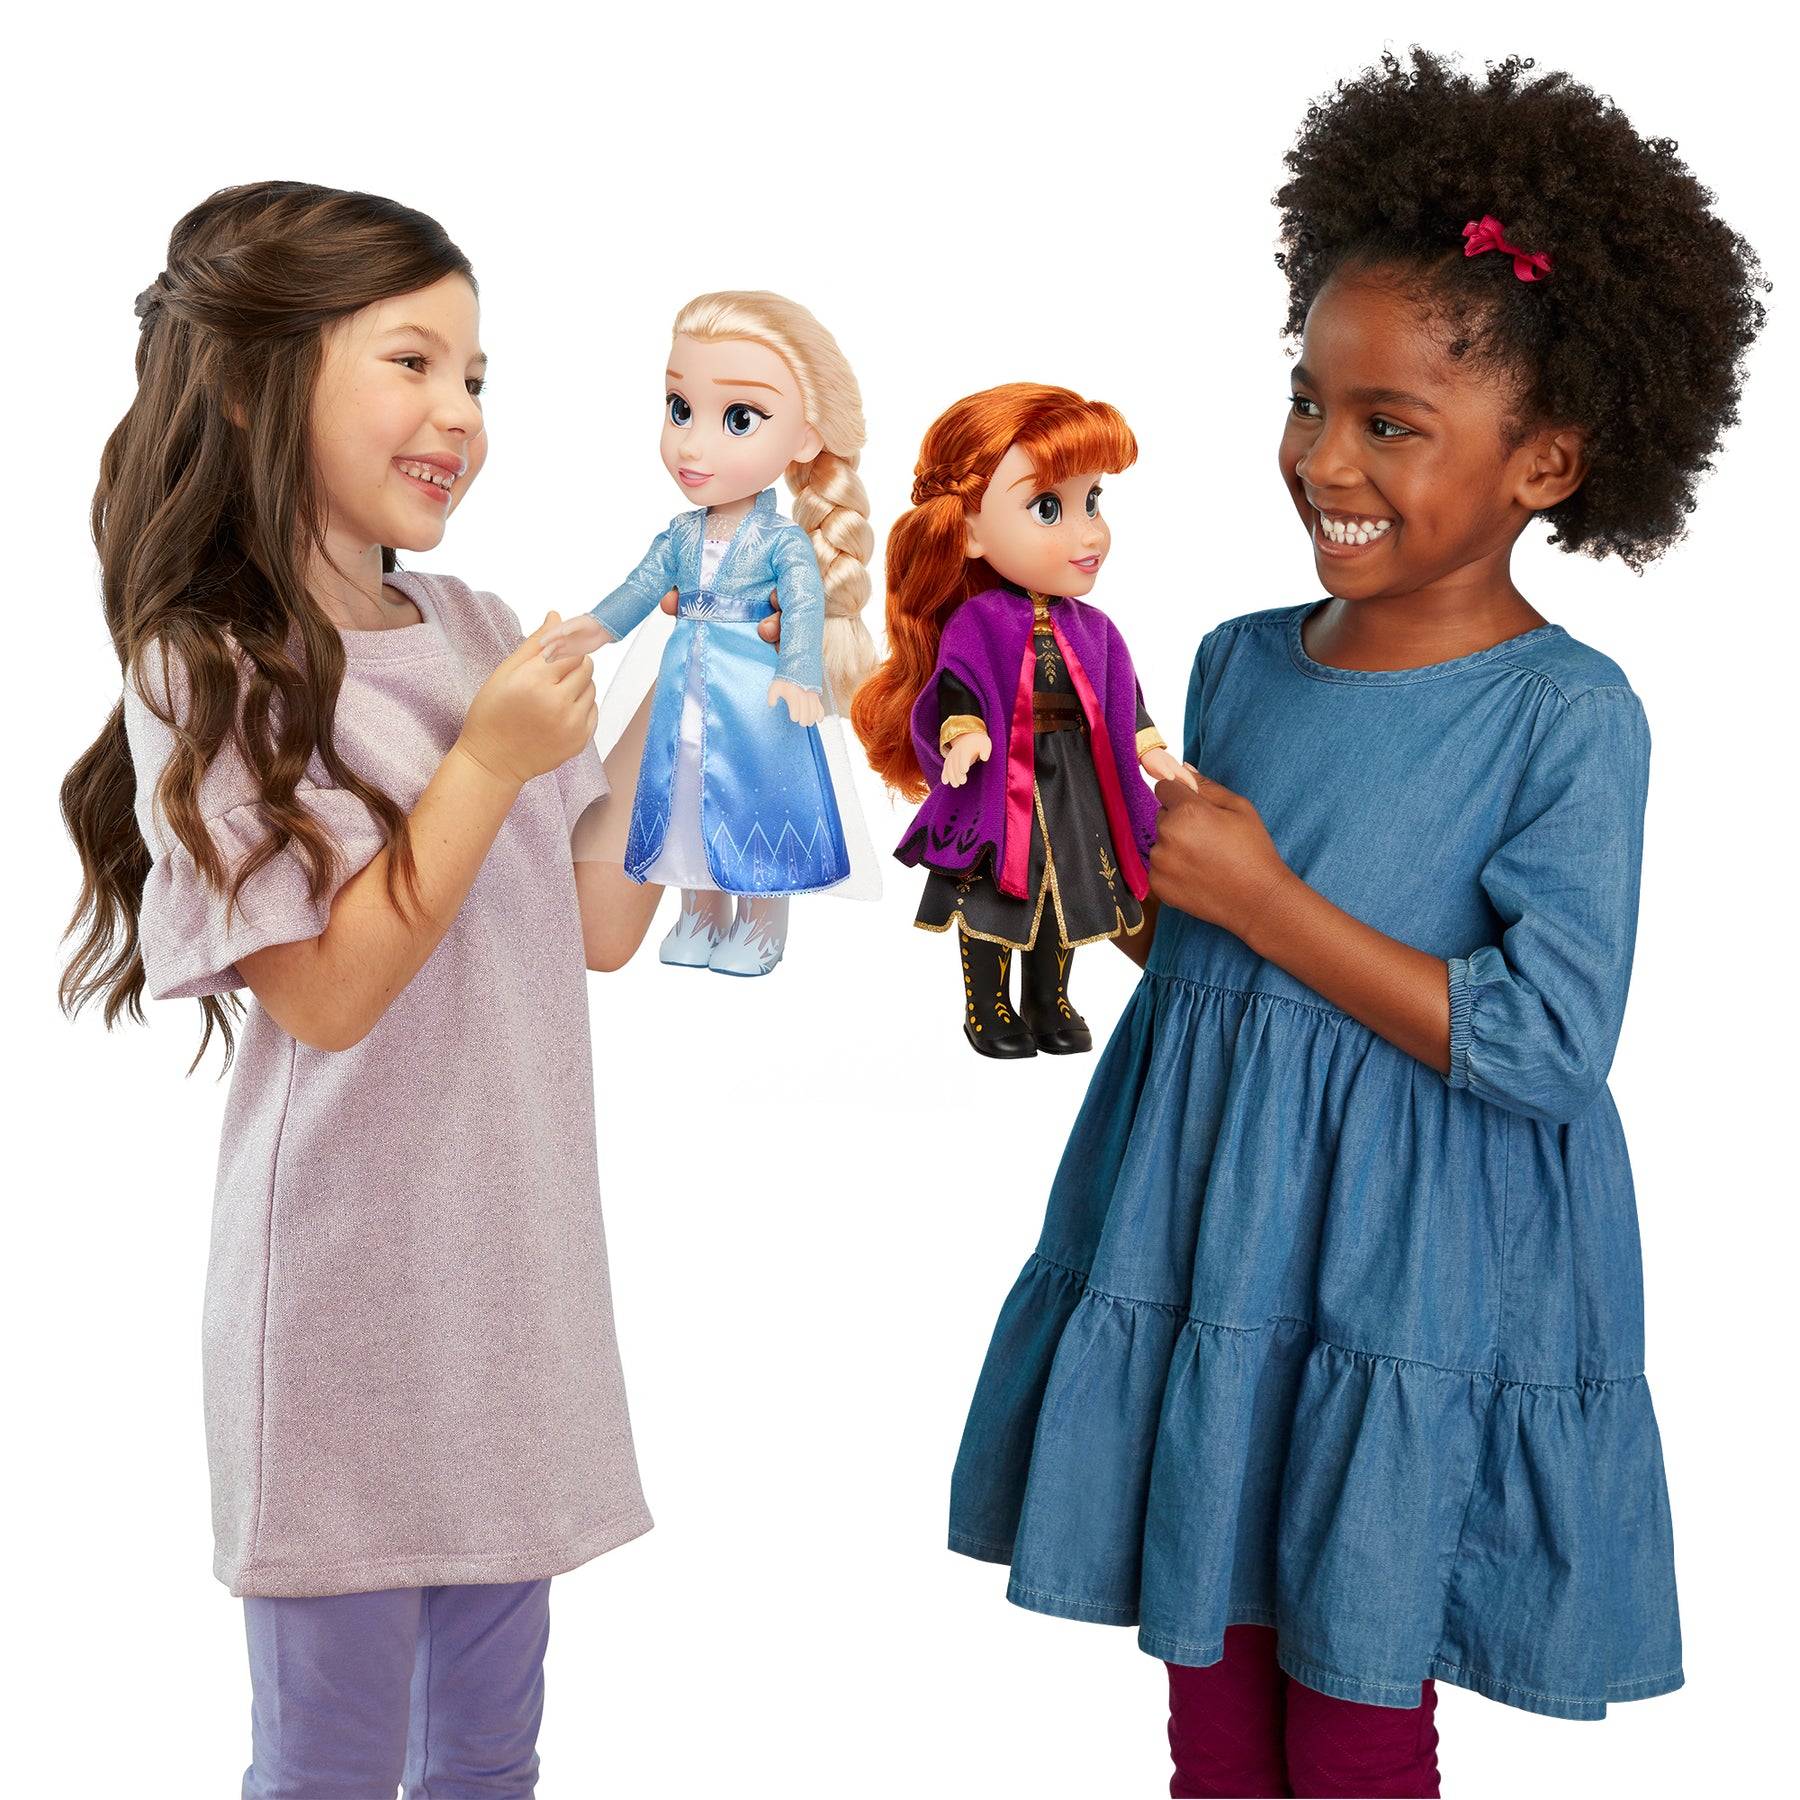 United Pacific Designs - Disney Frozen Arendelle Elsa Fashion Doll